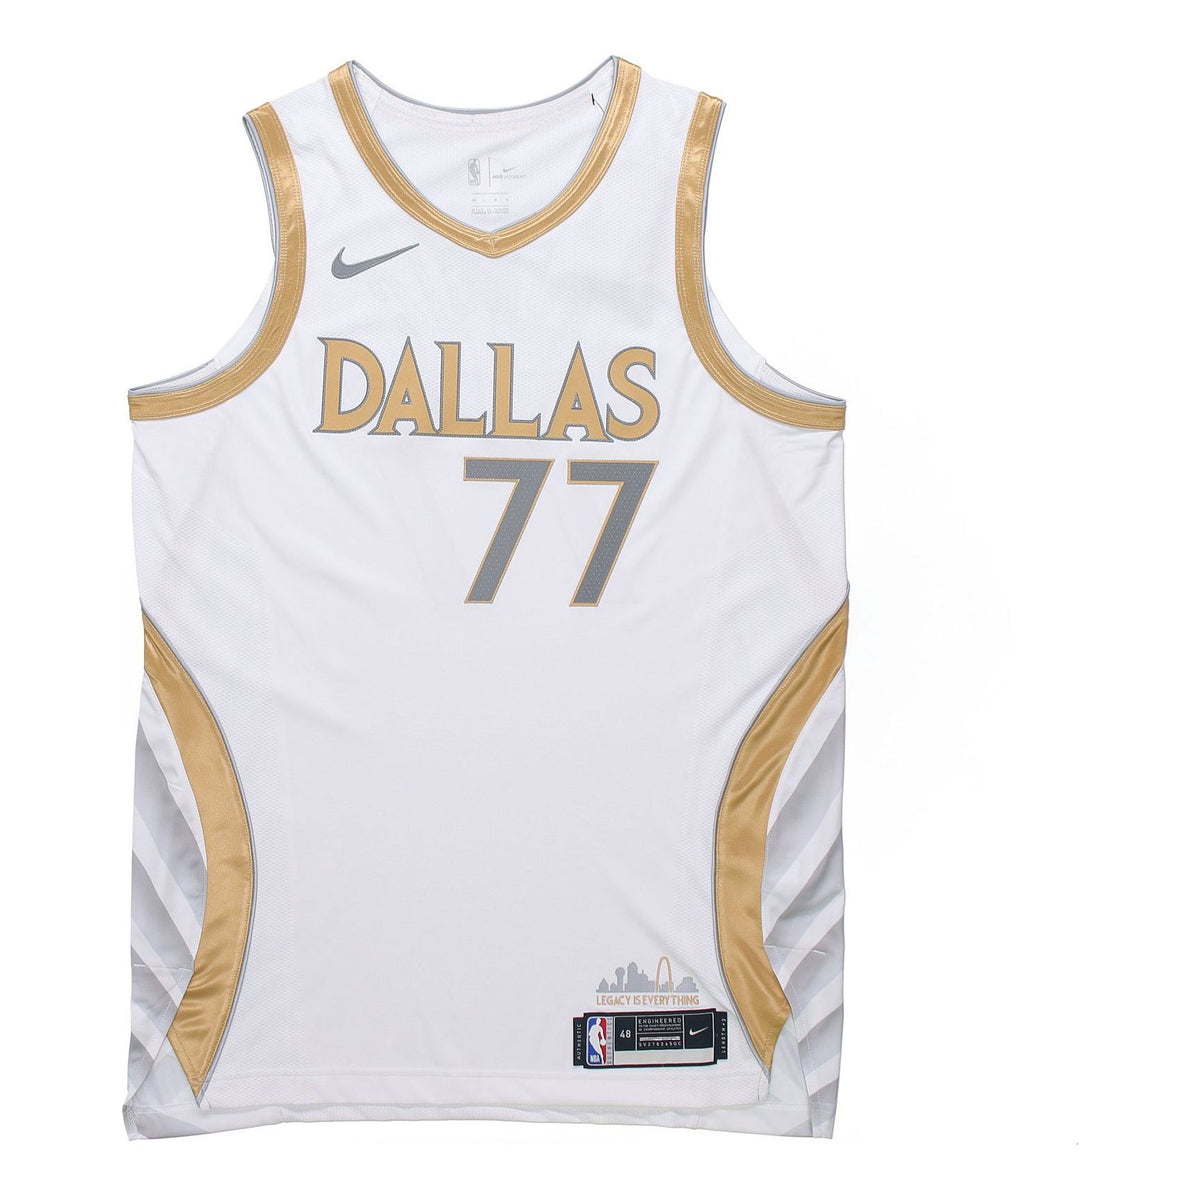 Luka Doncic Dallas Mavericks Nike 2020/21 Authentic Player Jersey White – City Edition